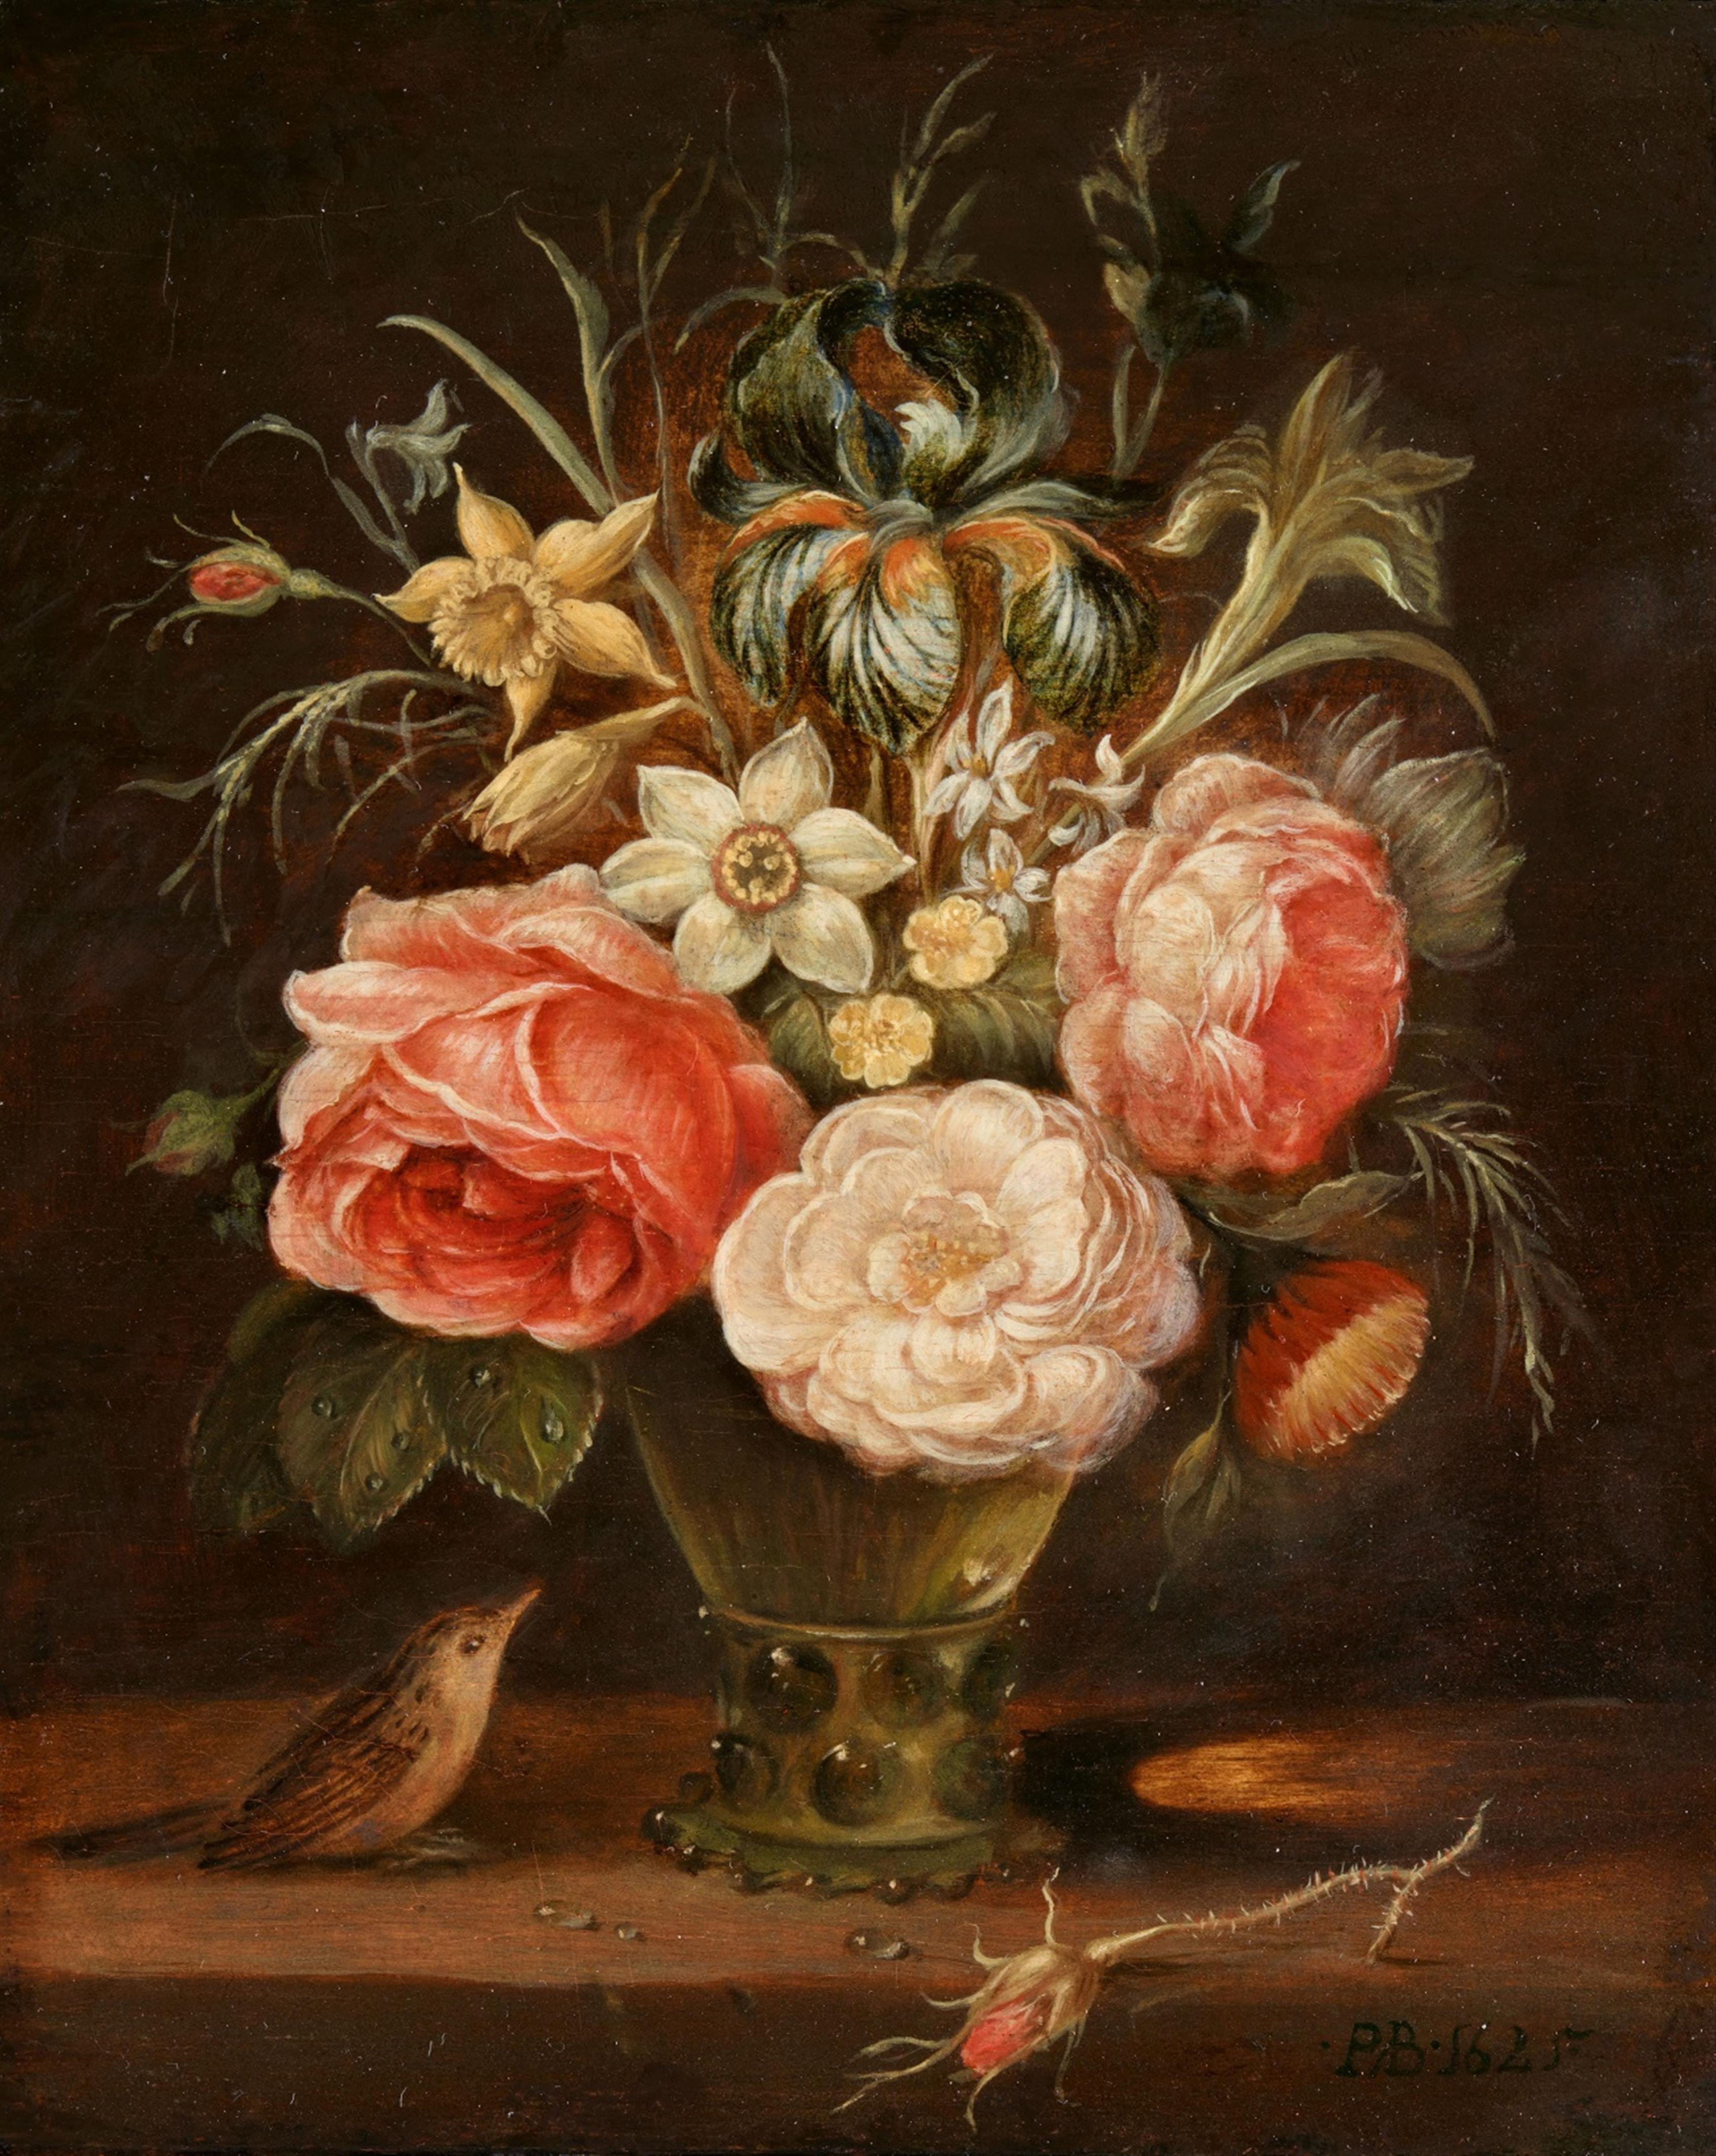 Peter Binoit - Flower Still Life in a Glass Vase with a Bird